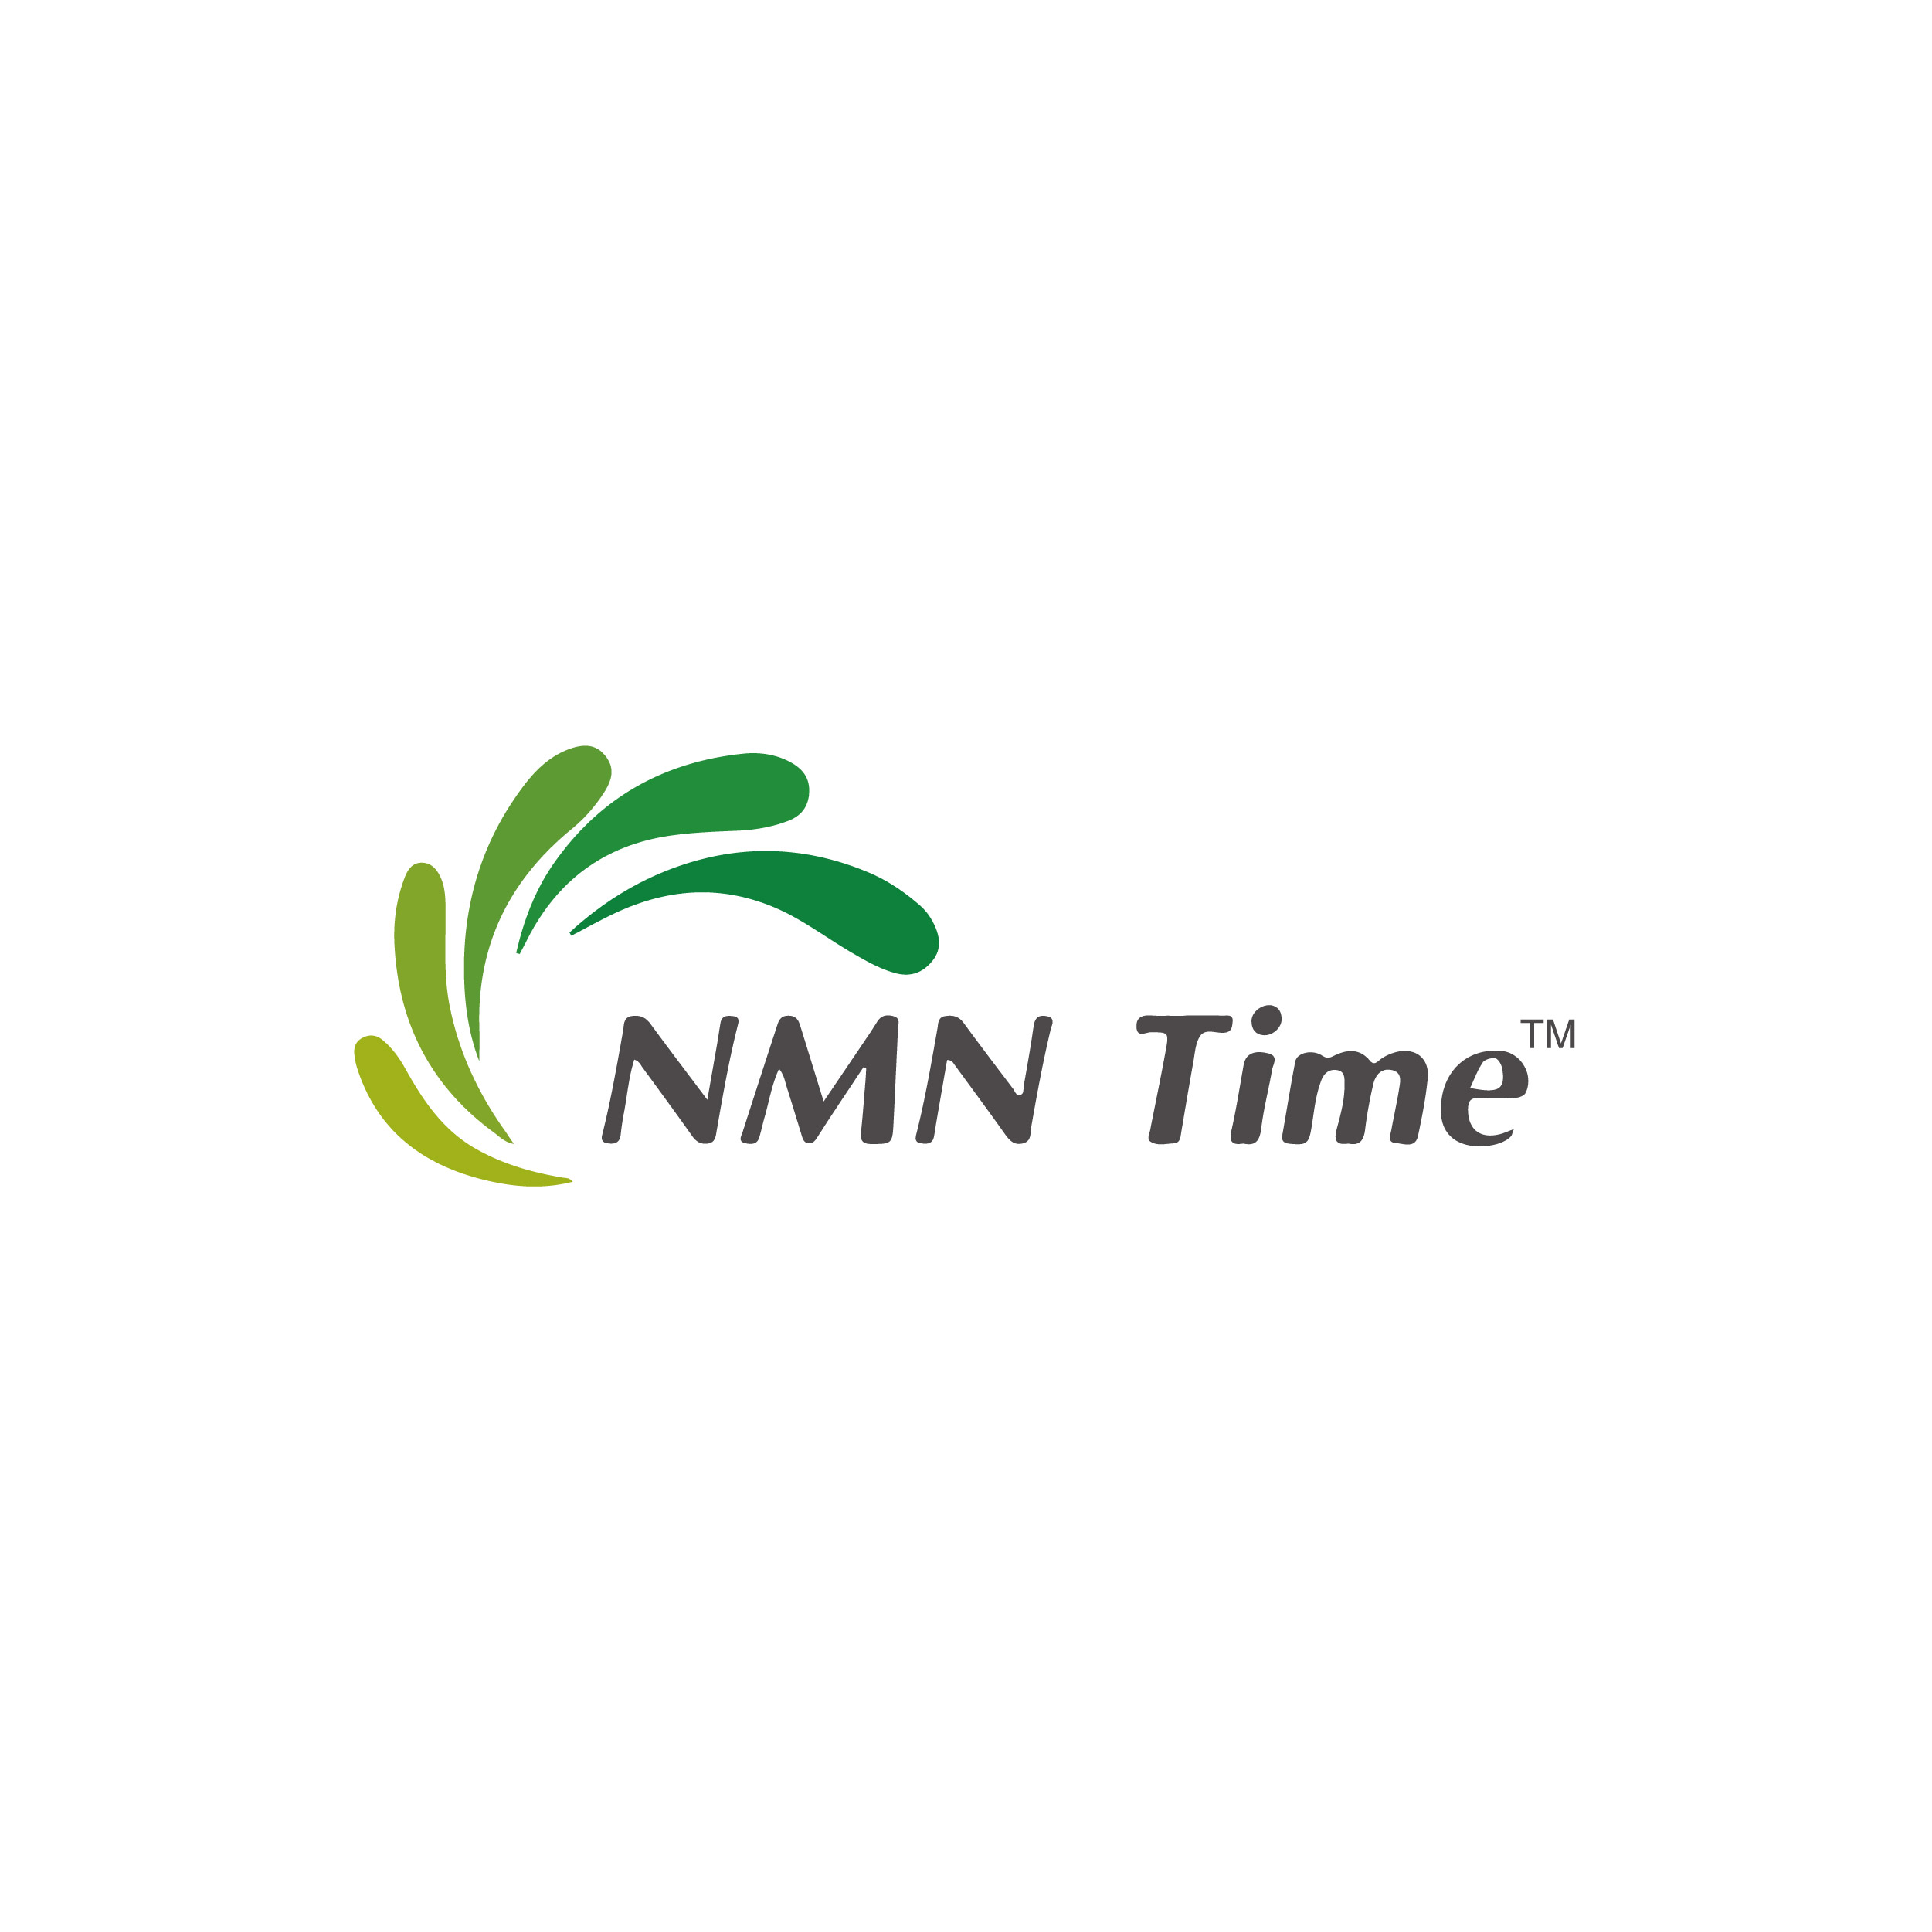 NMN Time